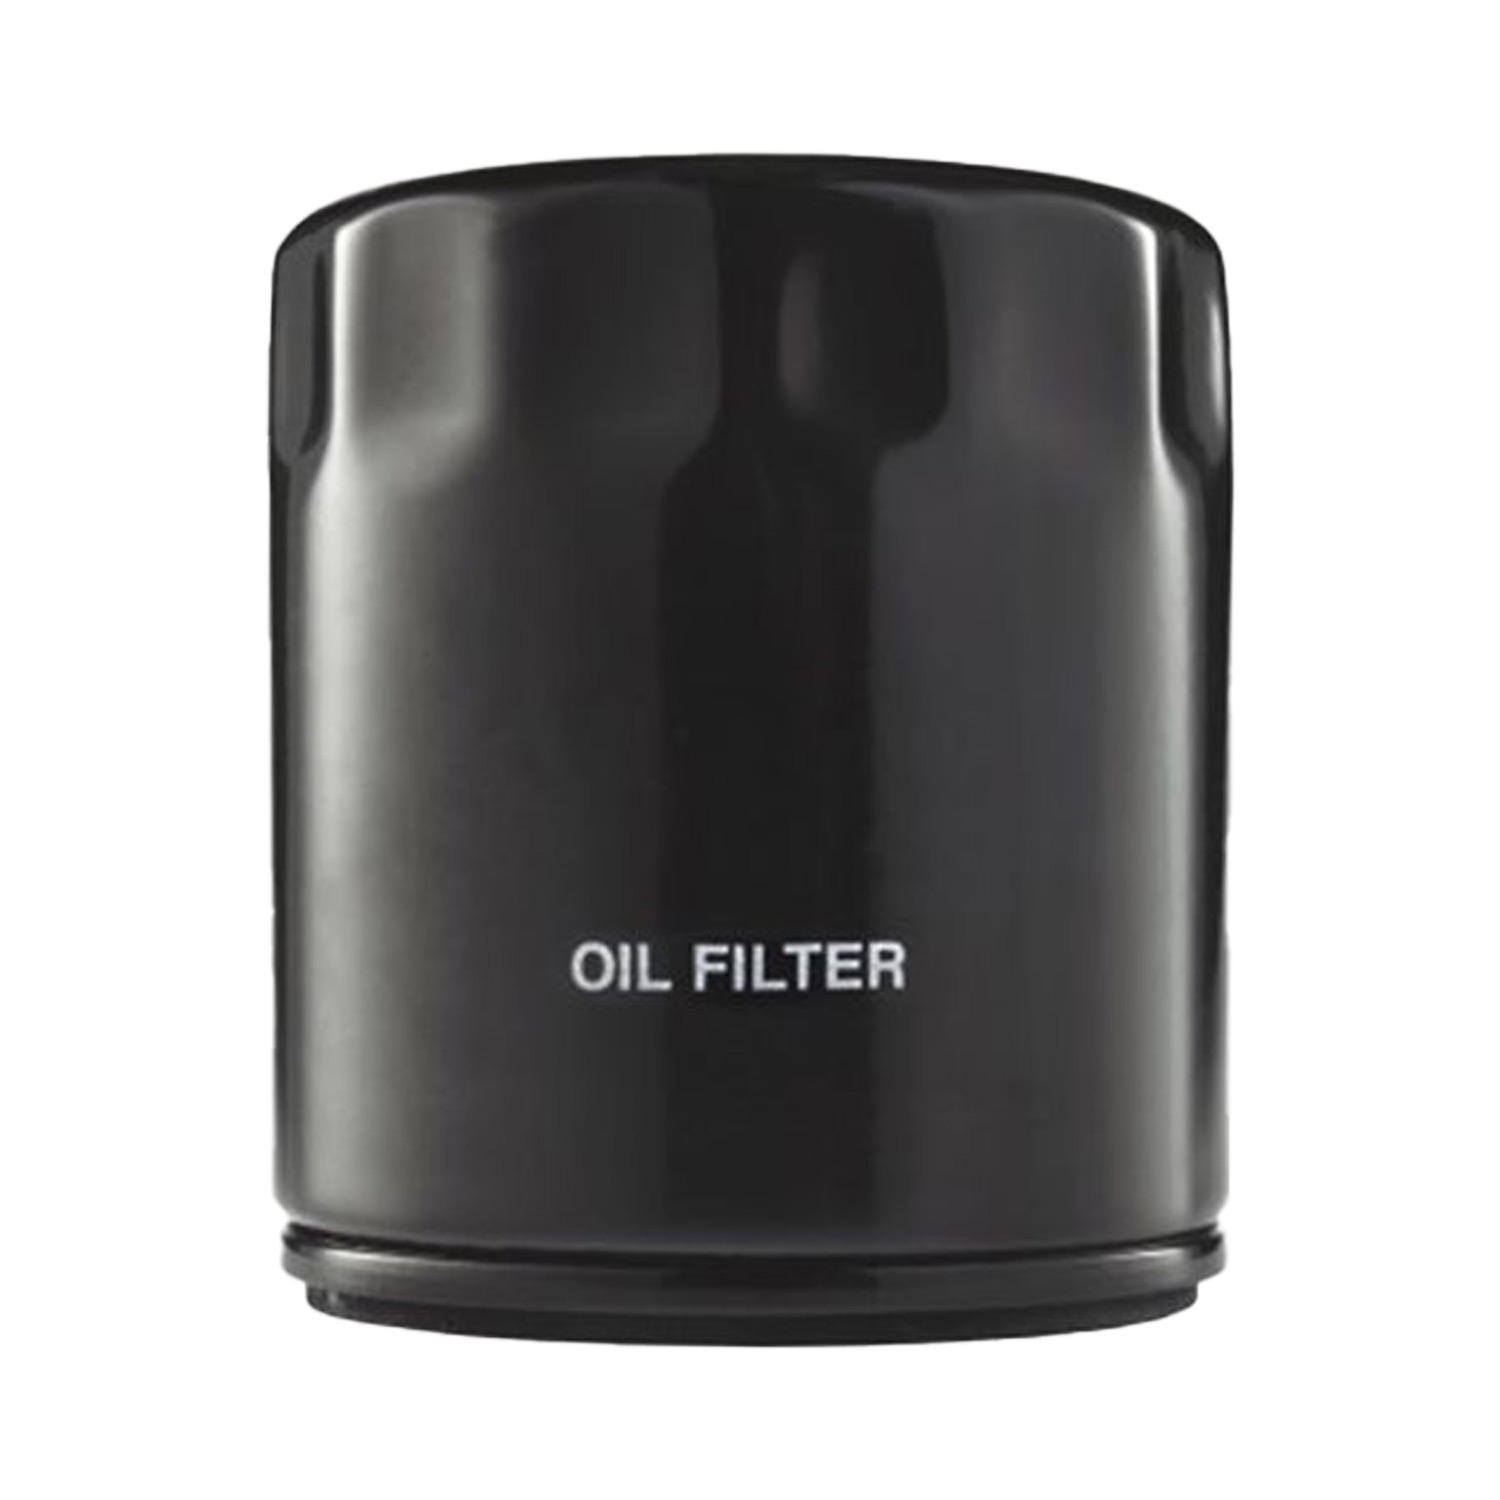 AloneGoer 3pcs 2520799 Oil Filter Compatible with Polaris Sportsman 500 Oil Filter 3084963 3089996 Magnum Ranger RZR Scrambler Trail Blazer Boss 1000 300 400 450 500 550 570 700 800 850 